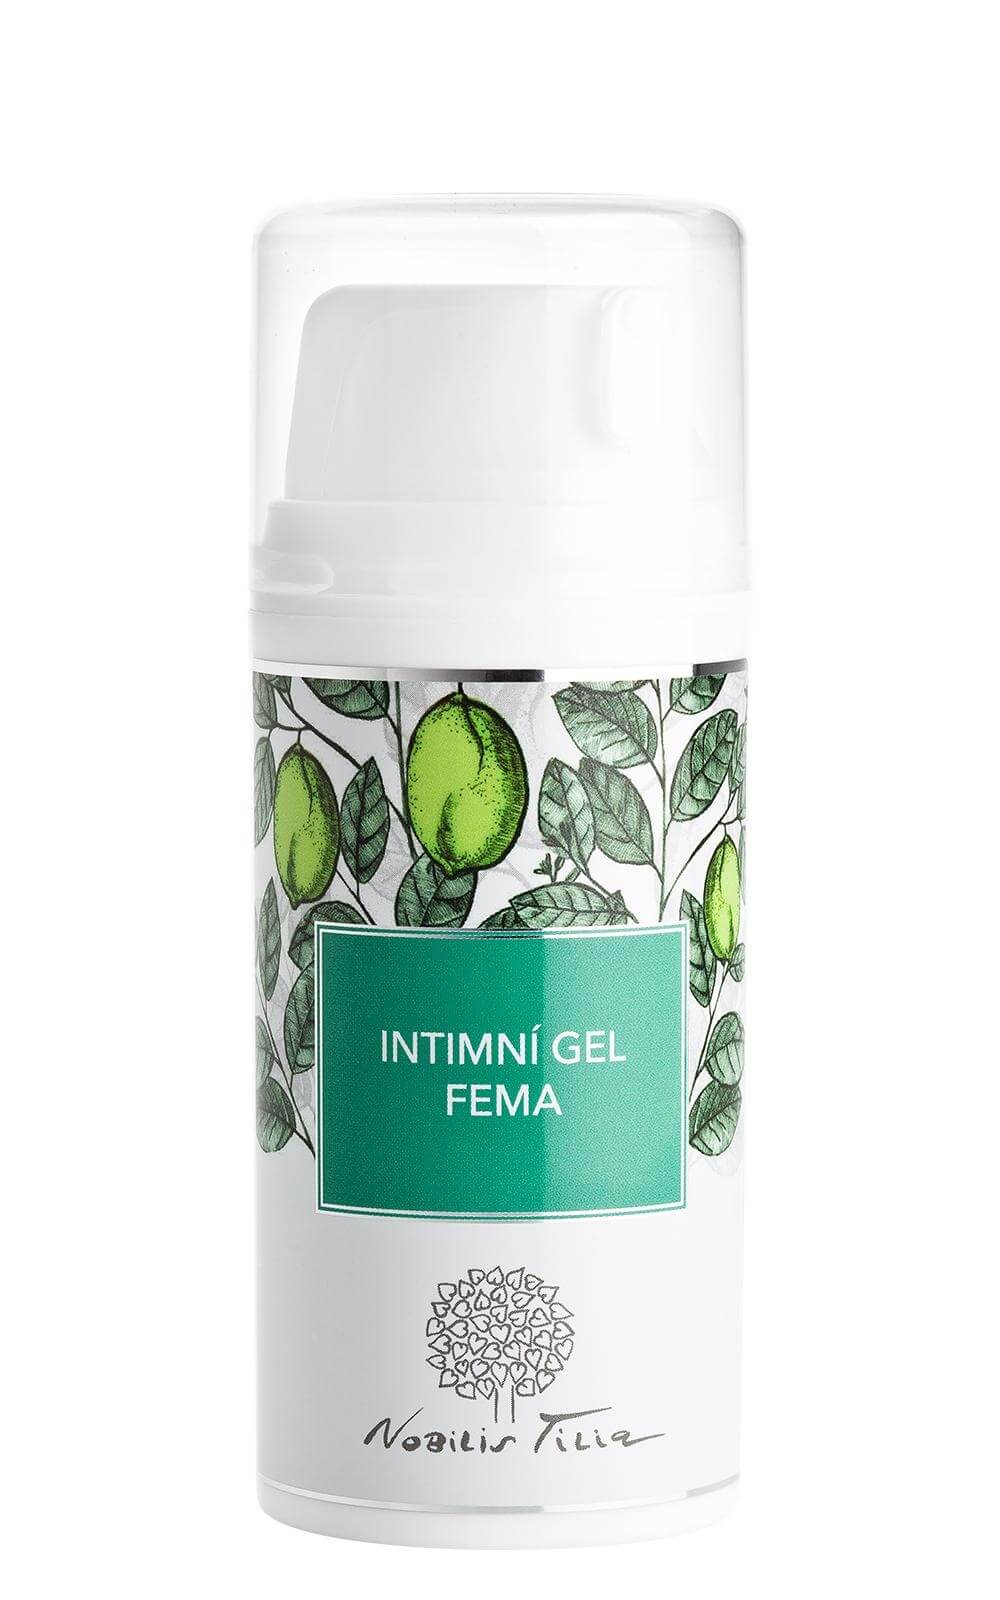 Zobrazit detail výrobku Nobilis Tilia Intimní gel Fema 100 ml